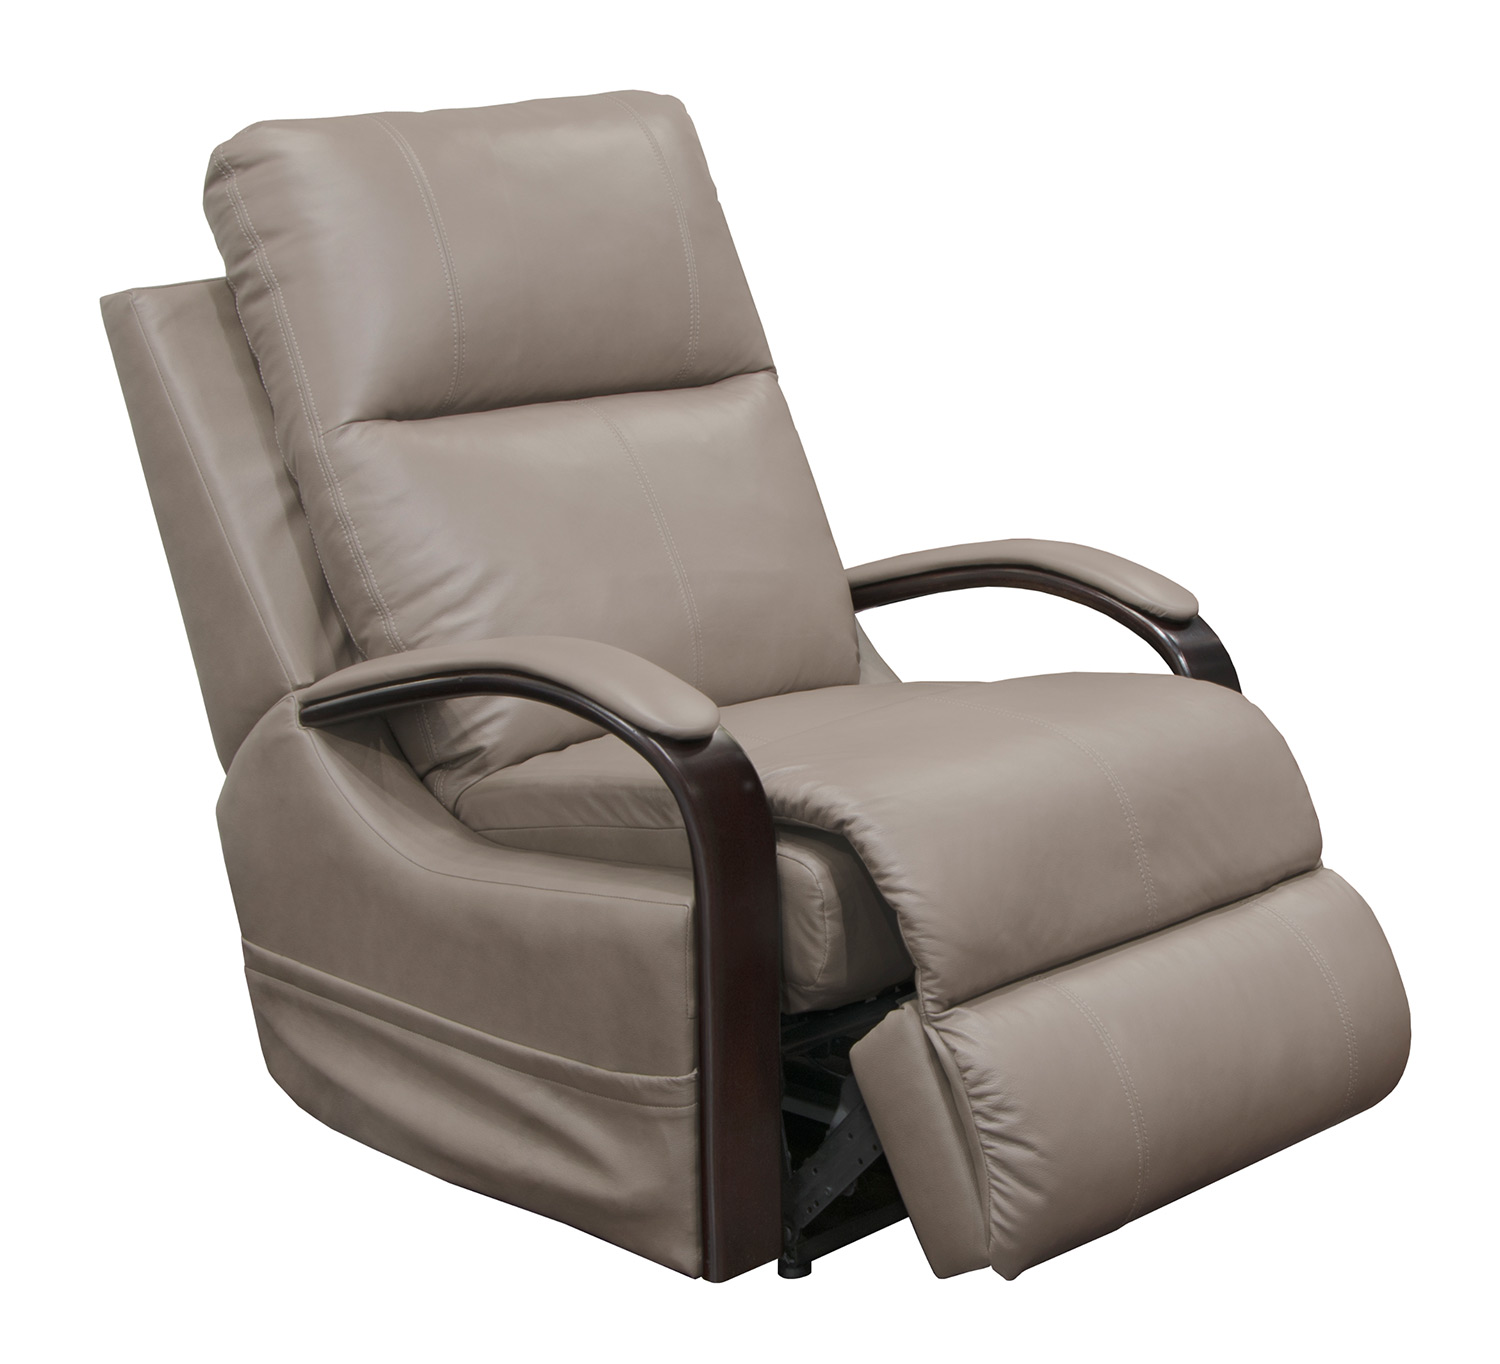 CatNapper Gianni Glider Recliner Chair - Light Grey